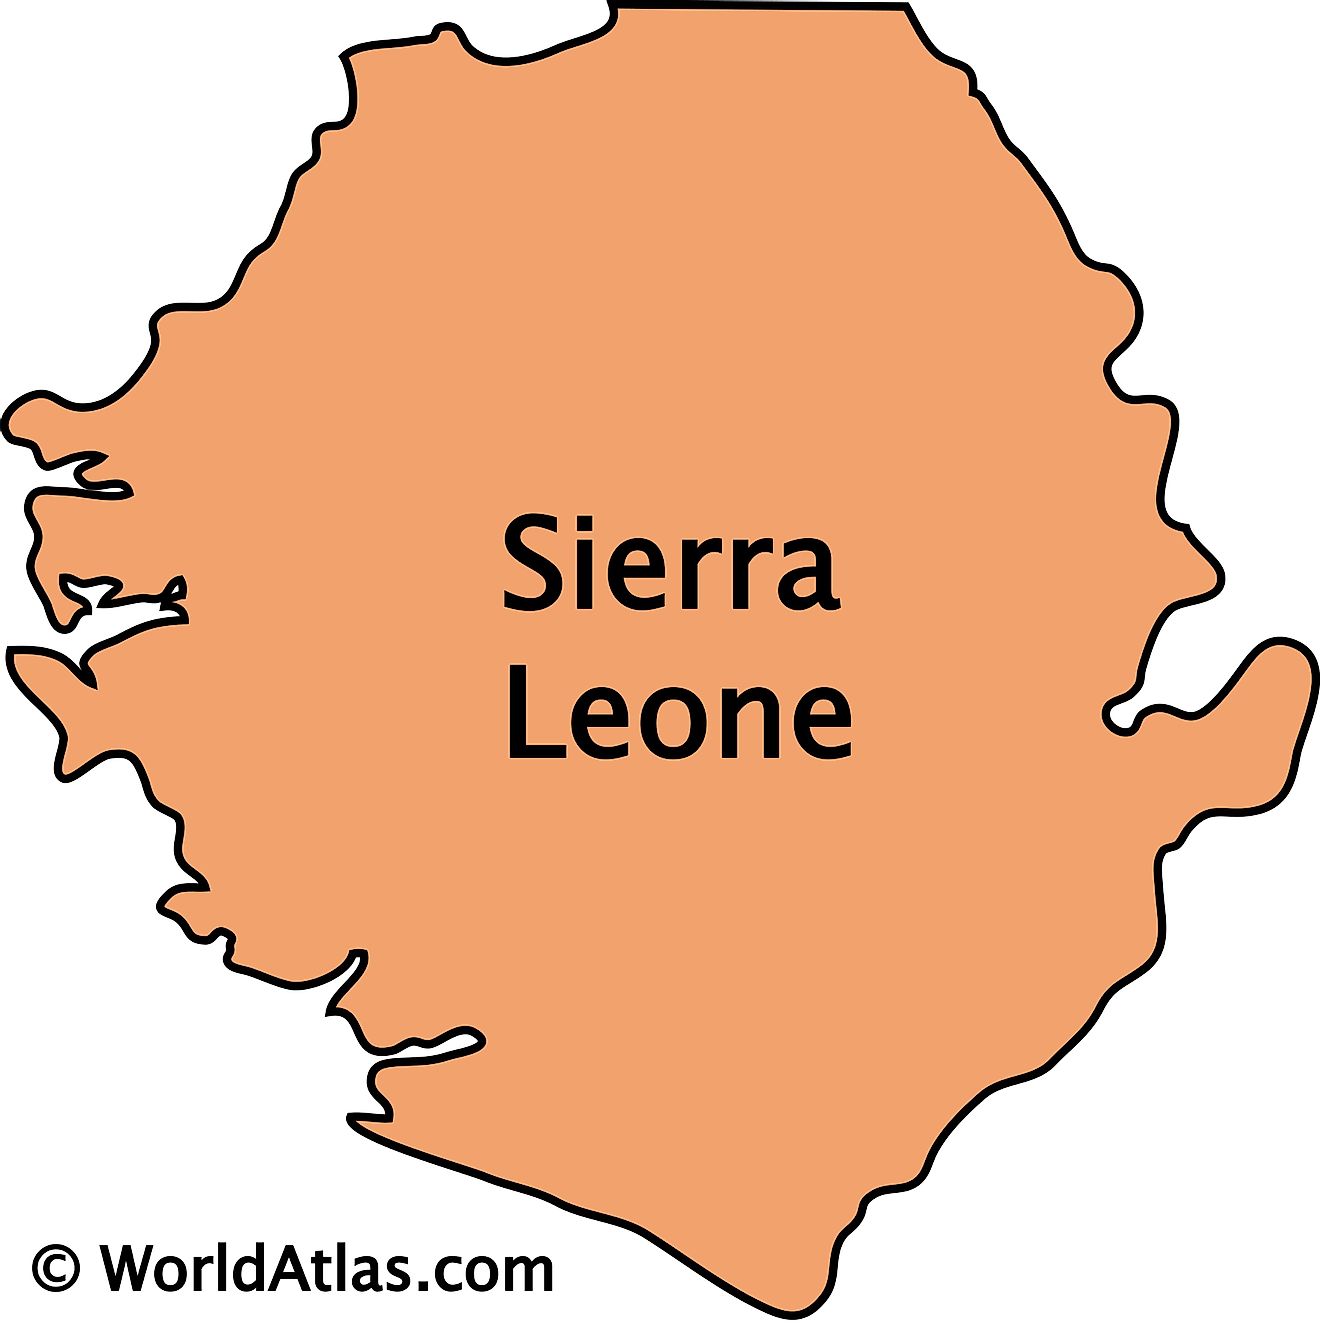 Mapa de contorno de Sierra Leona